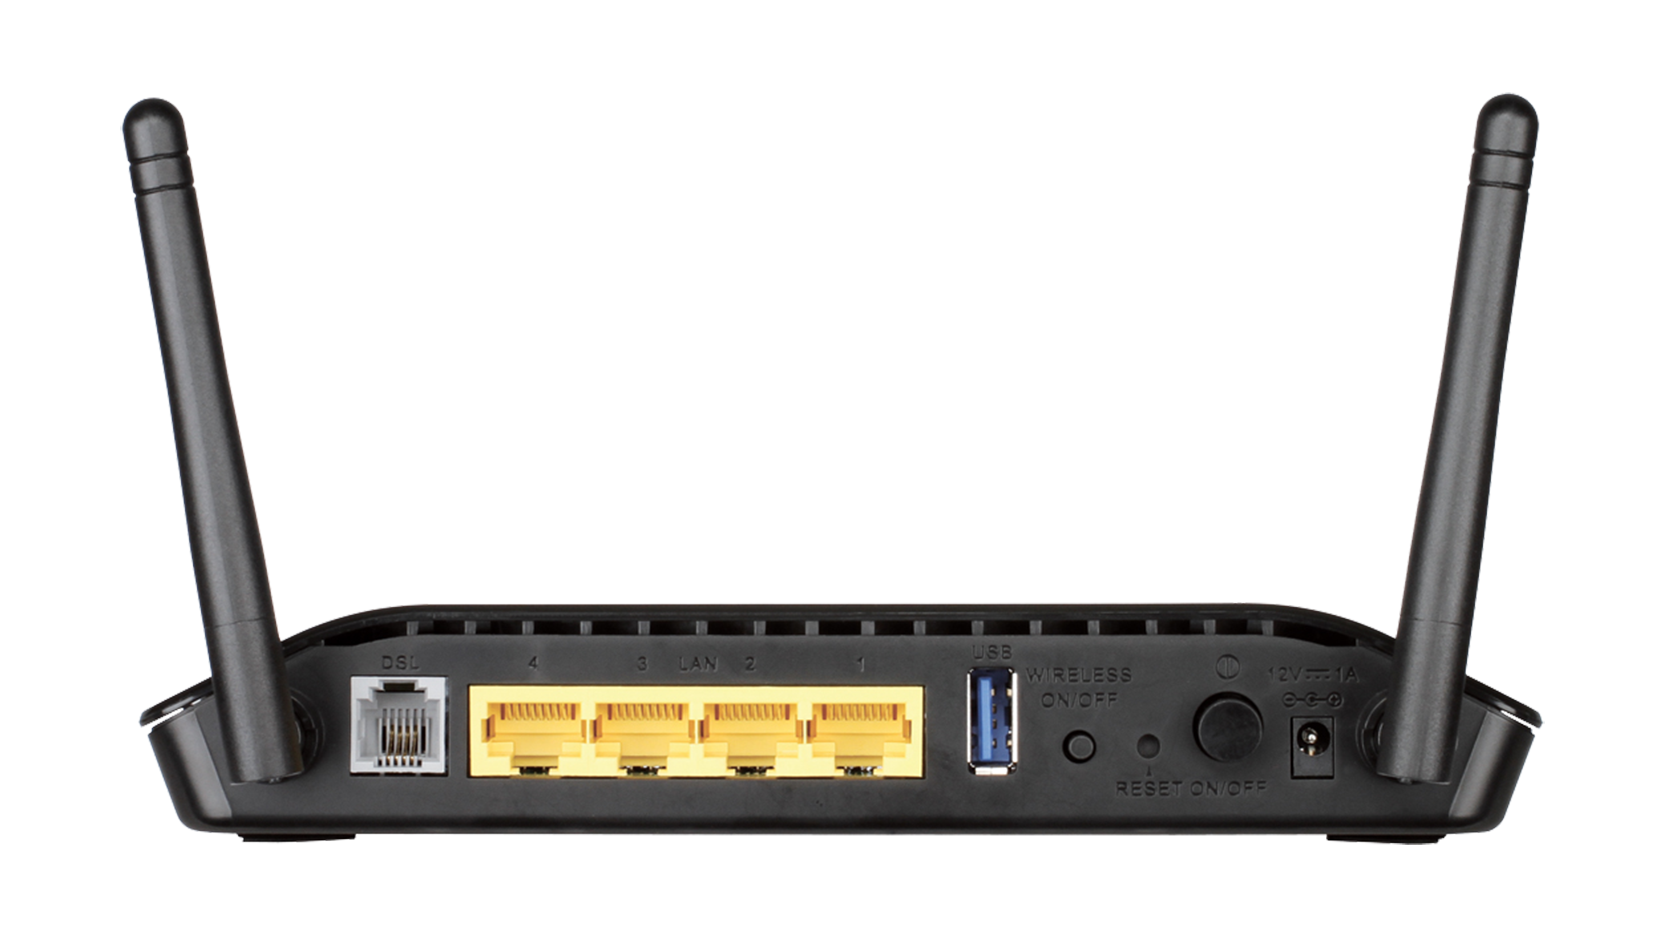 DSL-2751 Wireless N300 ADSL2+ Modem Router | D-Link